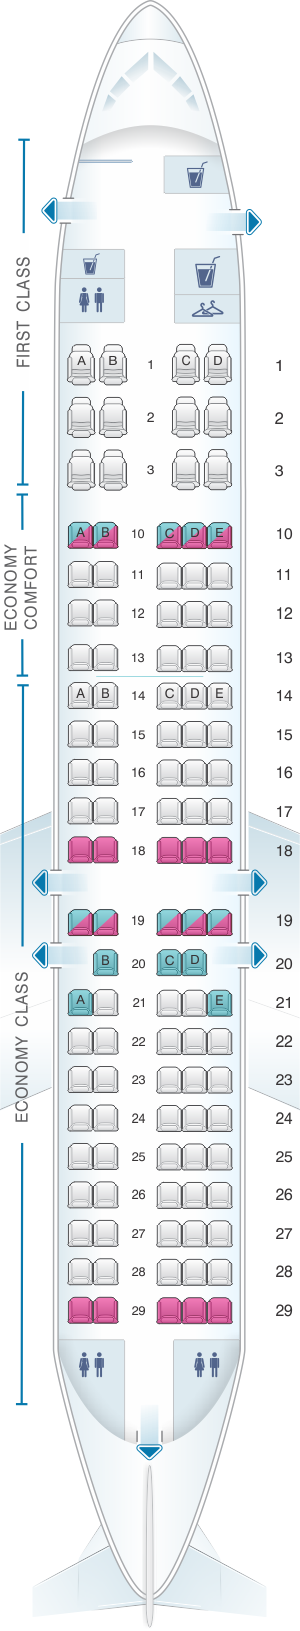 delta basic seat assignment